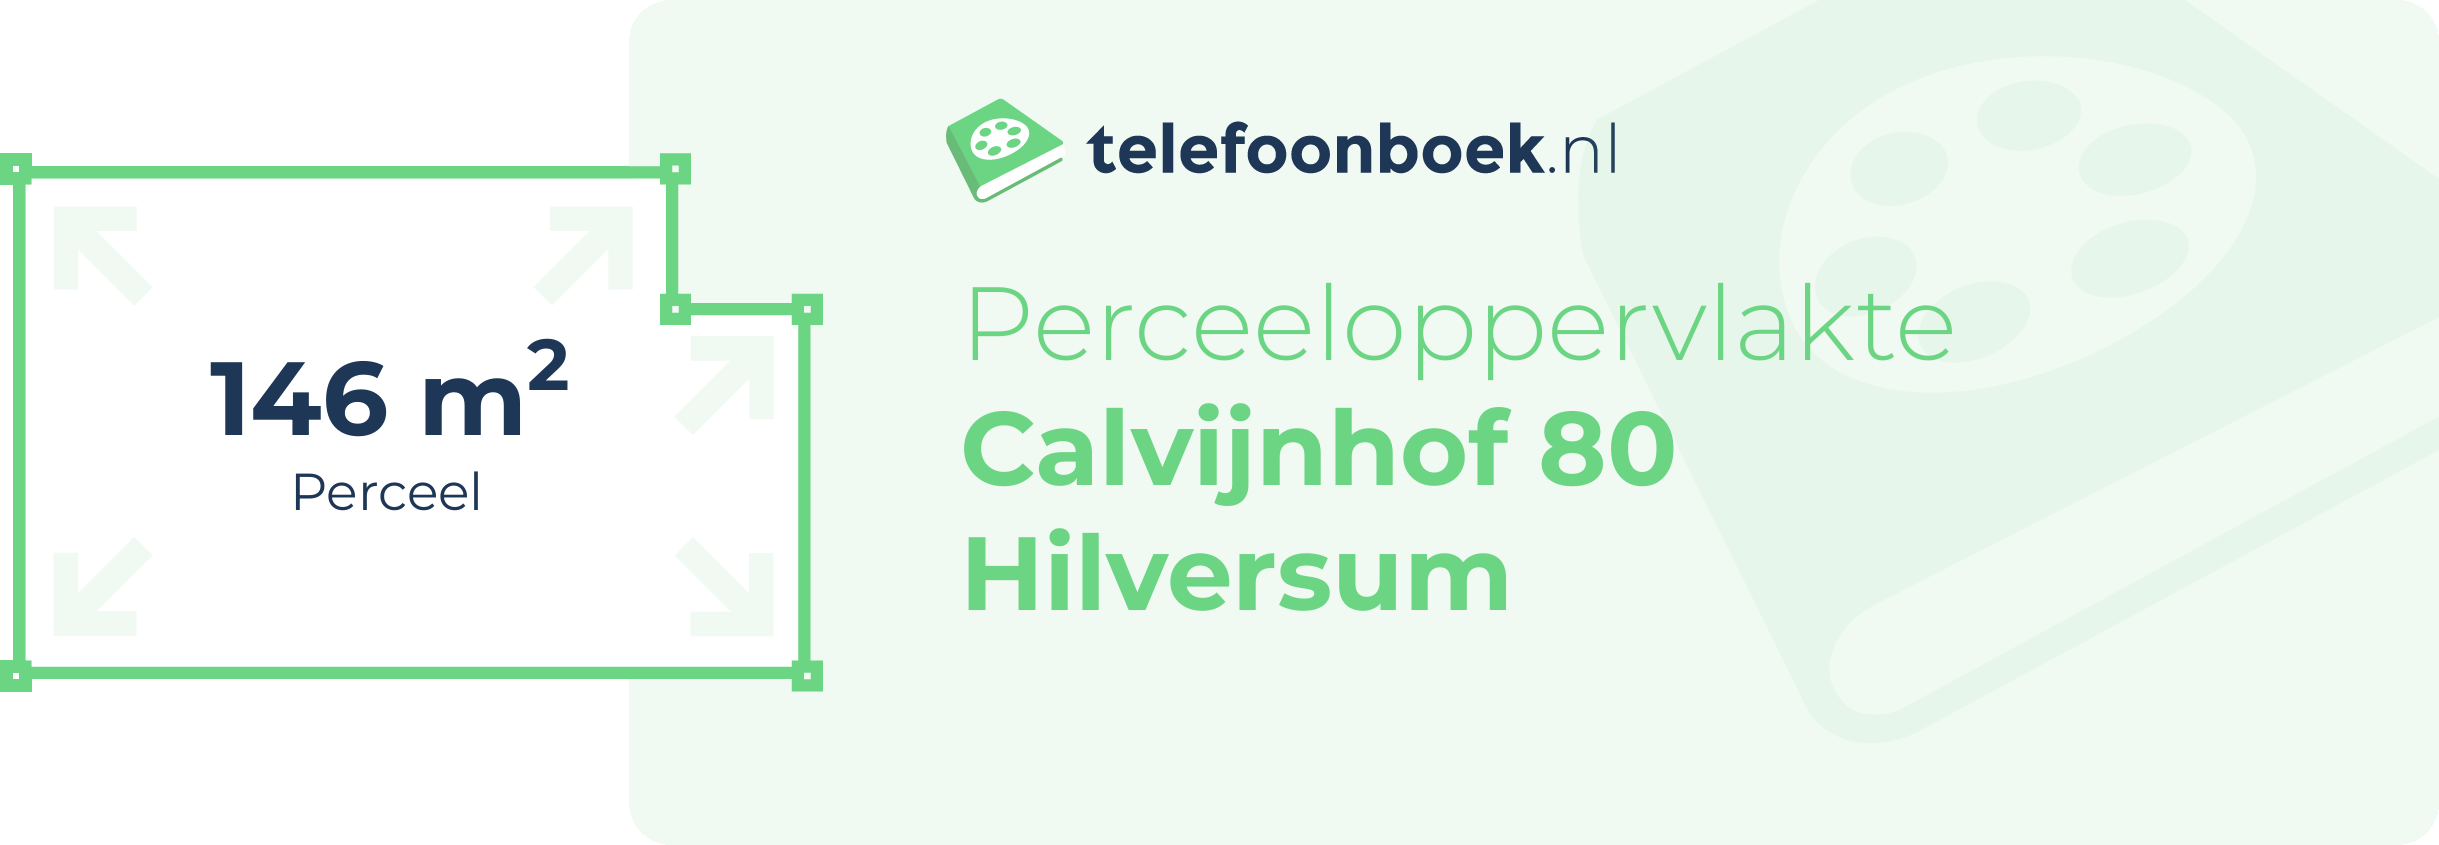 Perceeloppervlakte Calvijnhof 80 Hilversum